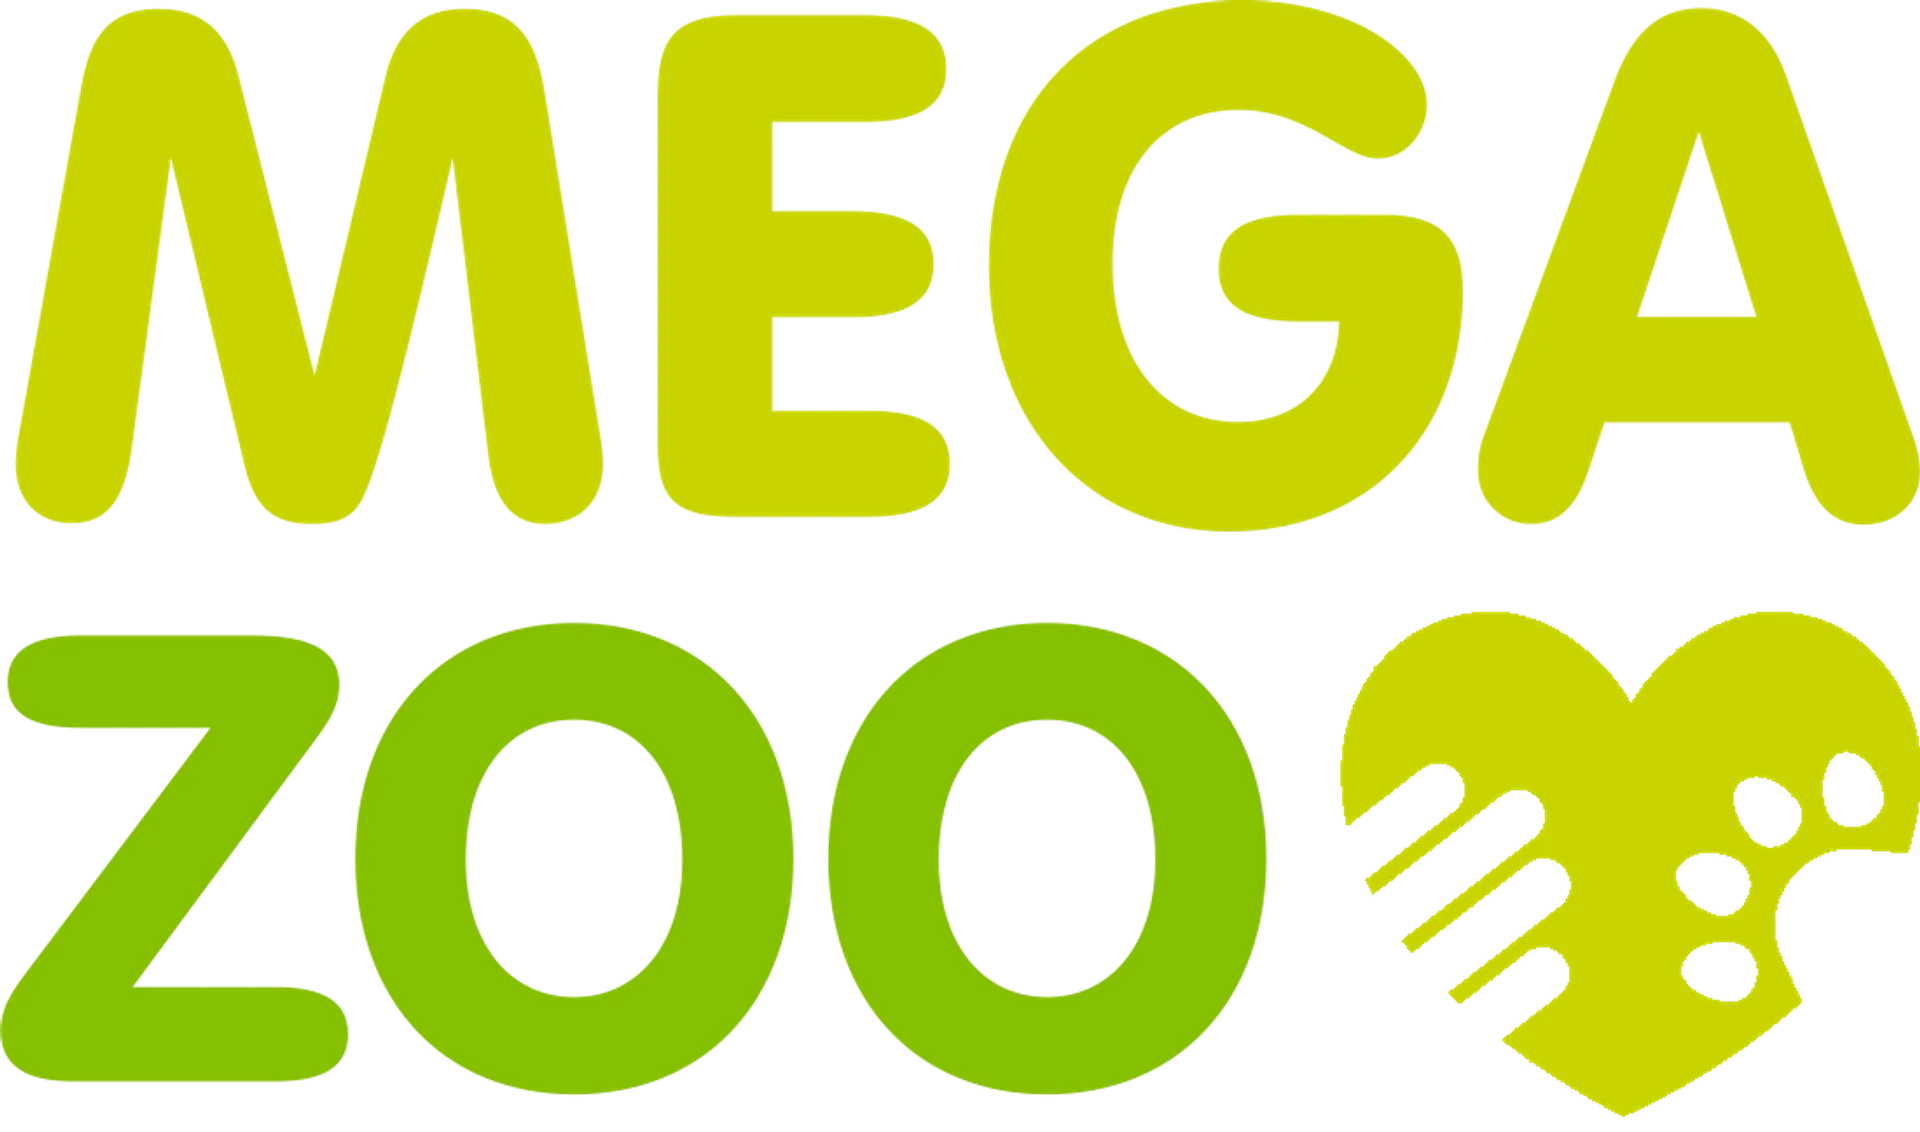 MEGAZOO logo die aktuell Flugblatt